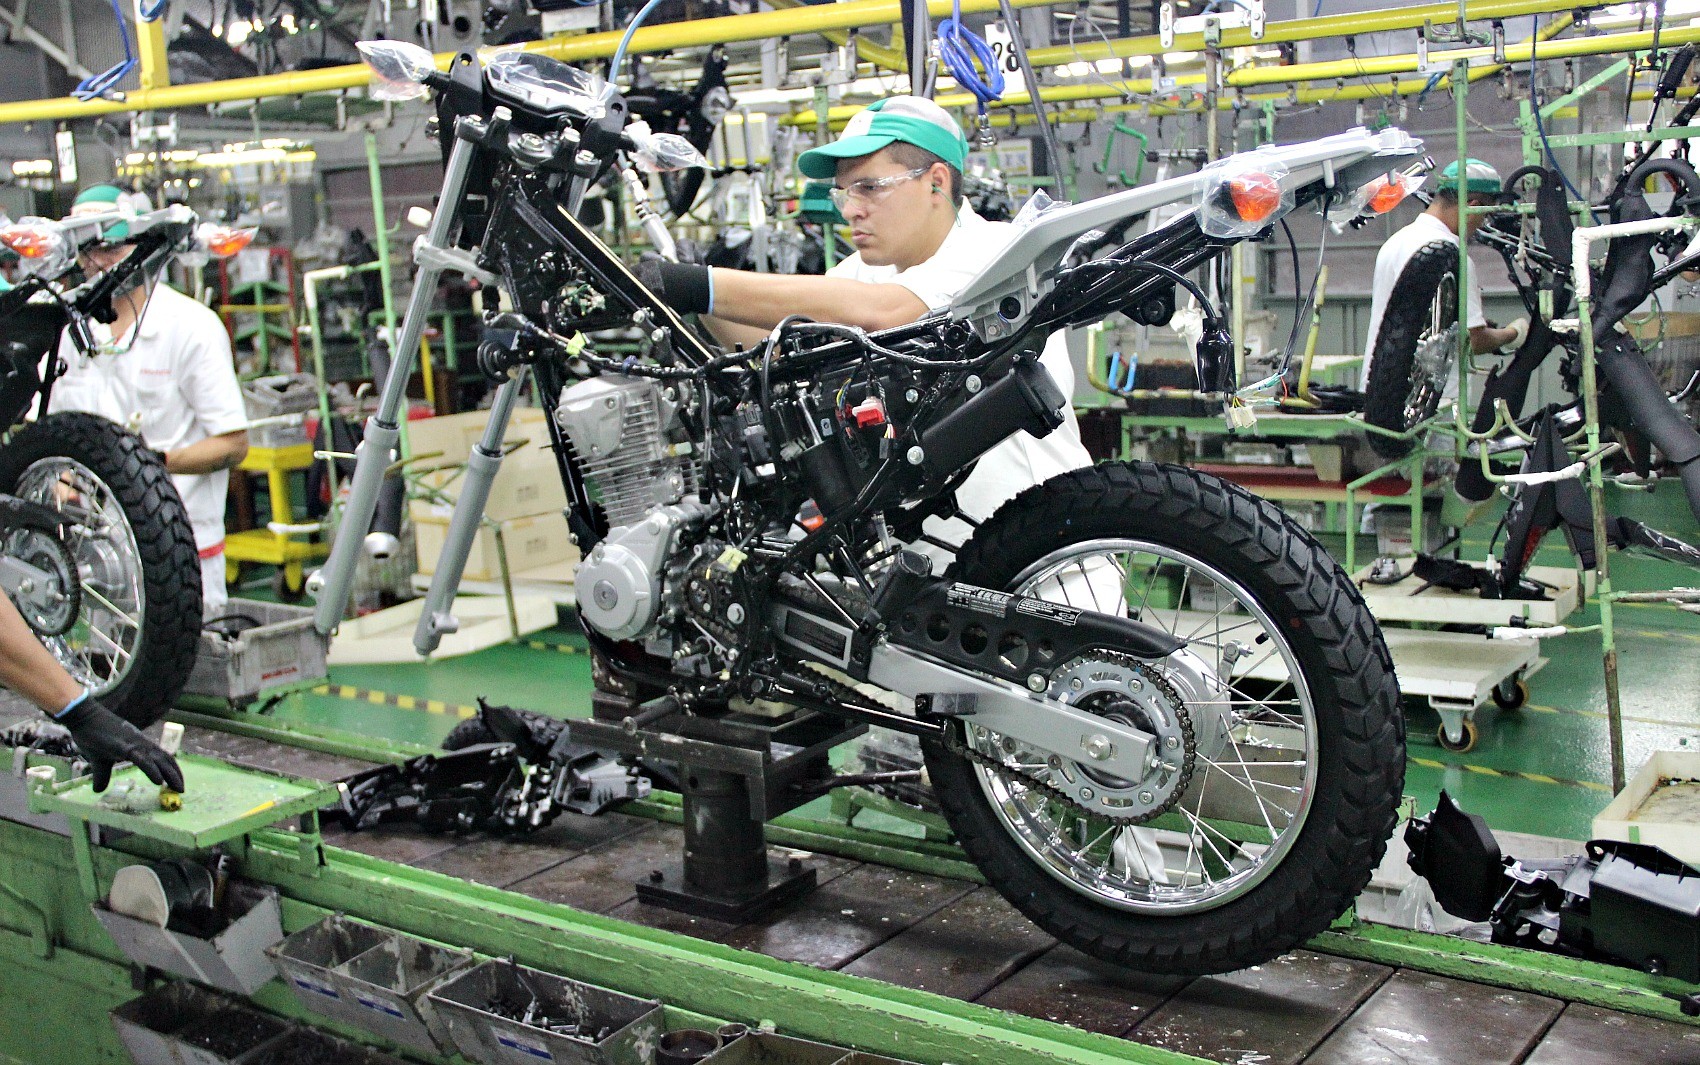 producao-de-motos-no-polo-industrial-de-manaus-fecha-marco-com-alta-de-116,4%